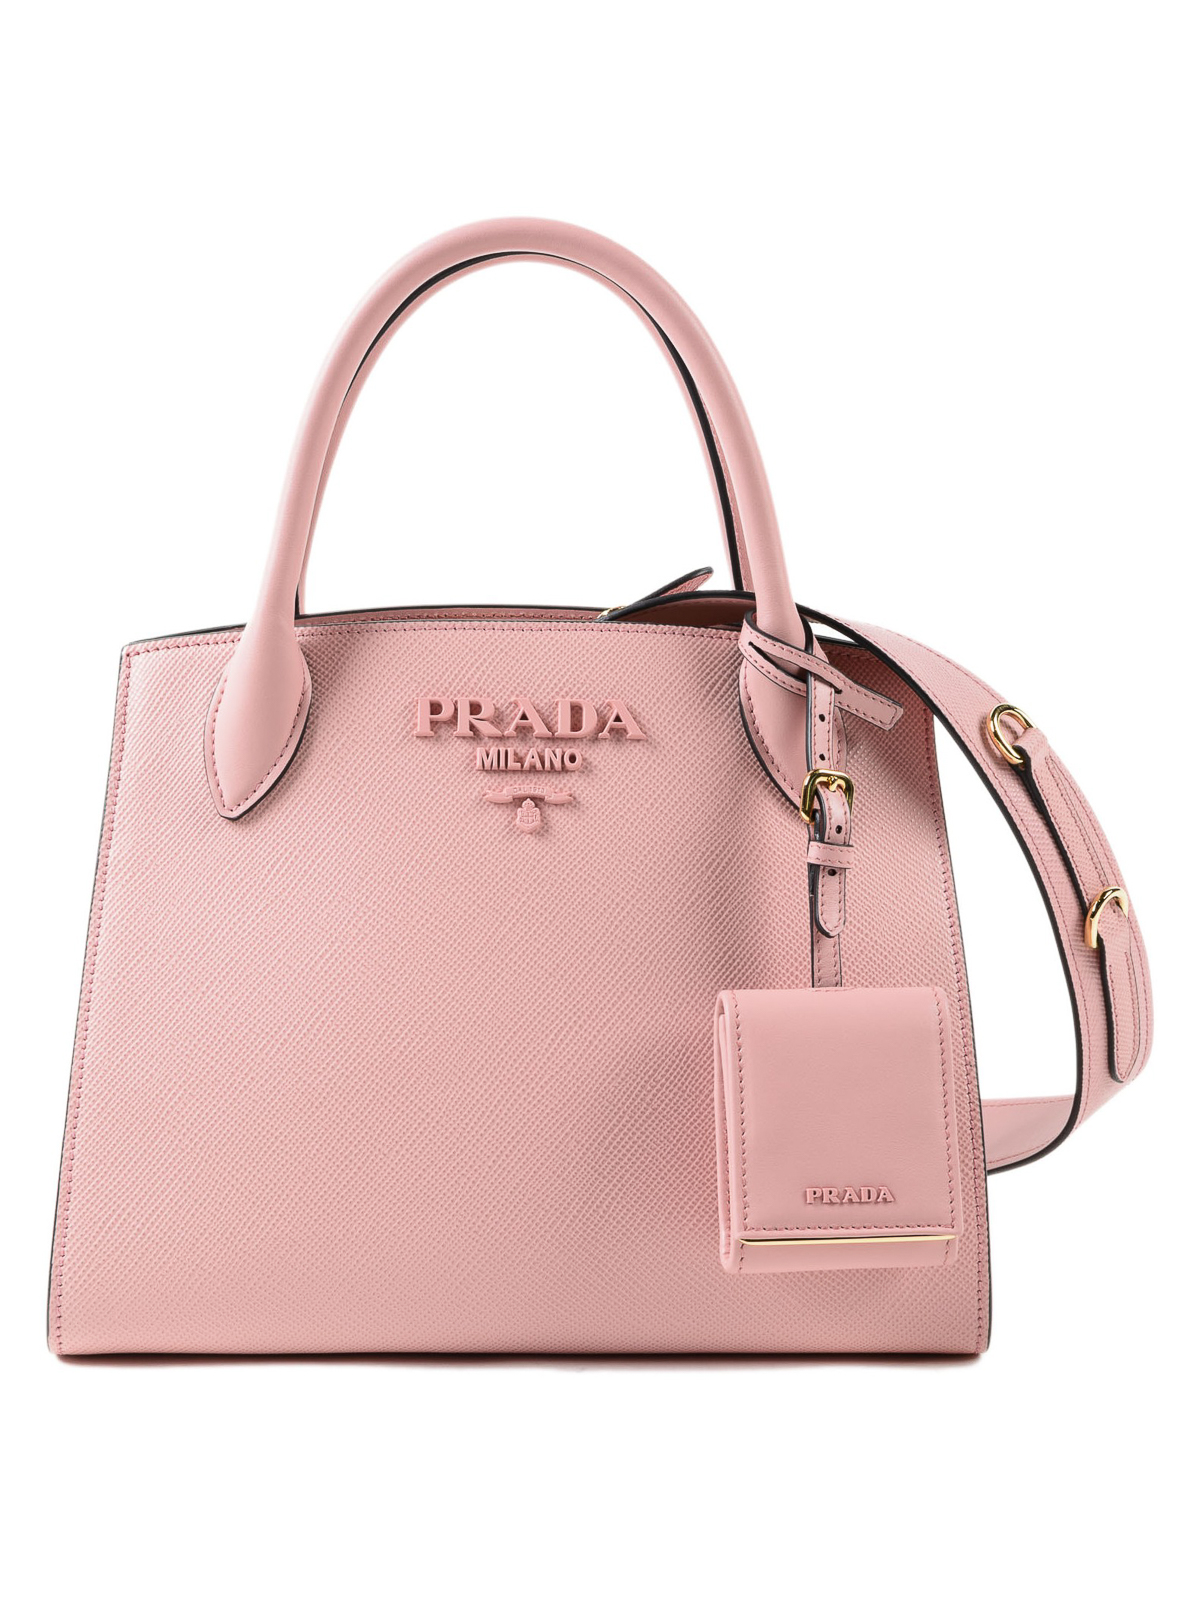 Prada Women Monochrome Saffiano Leather Bag-Pink